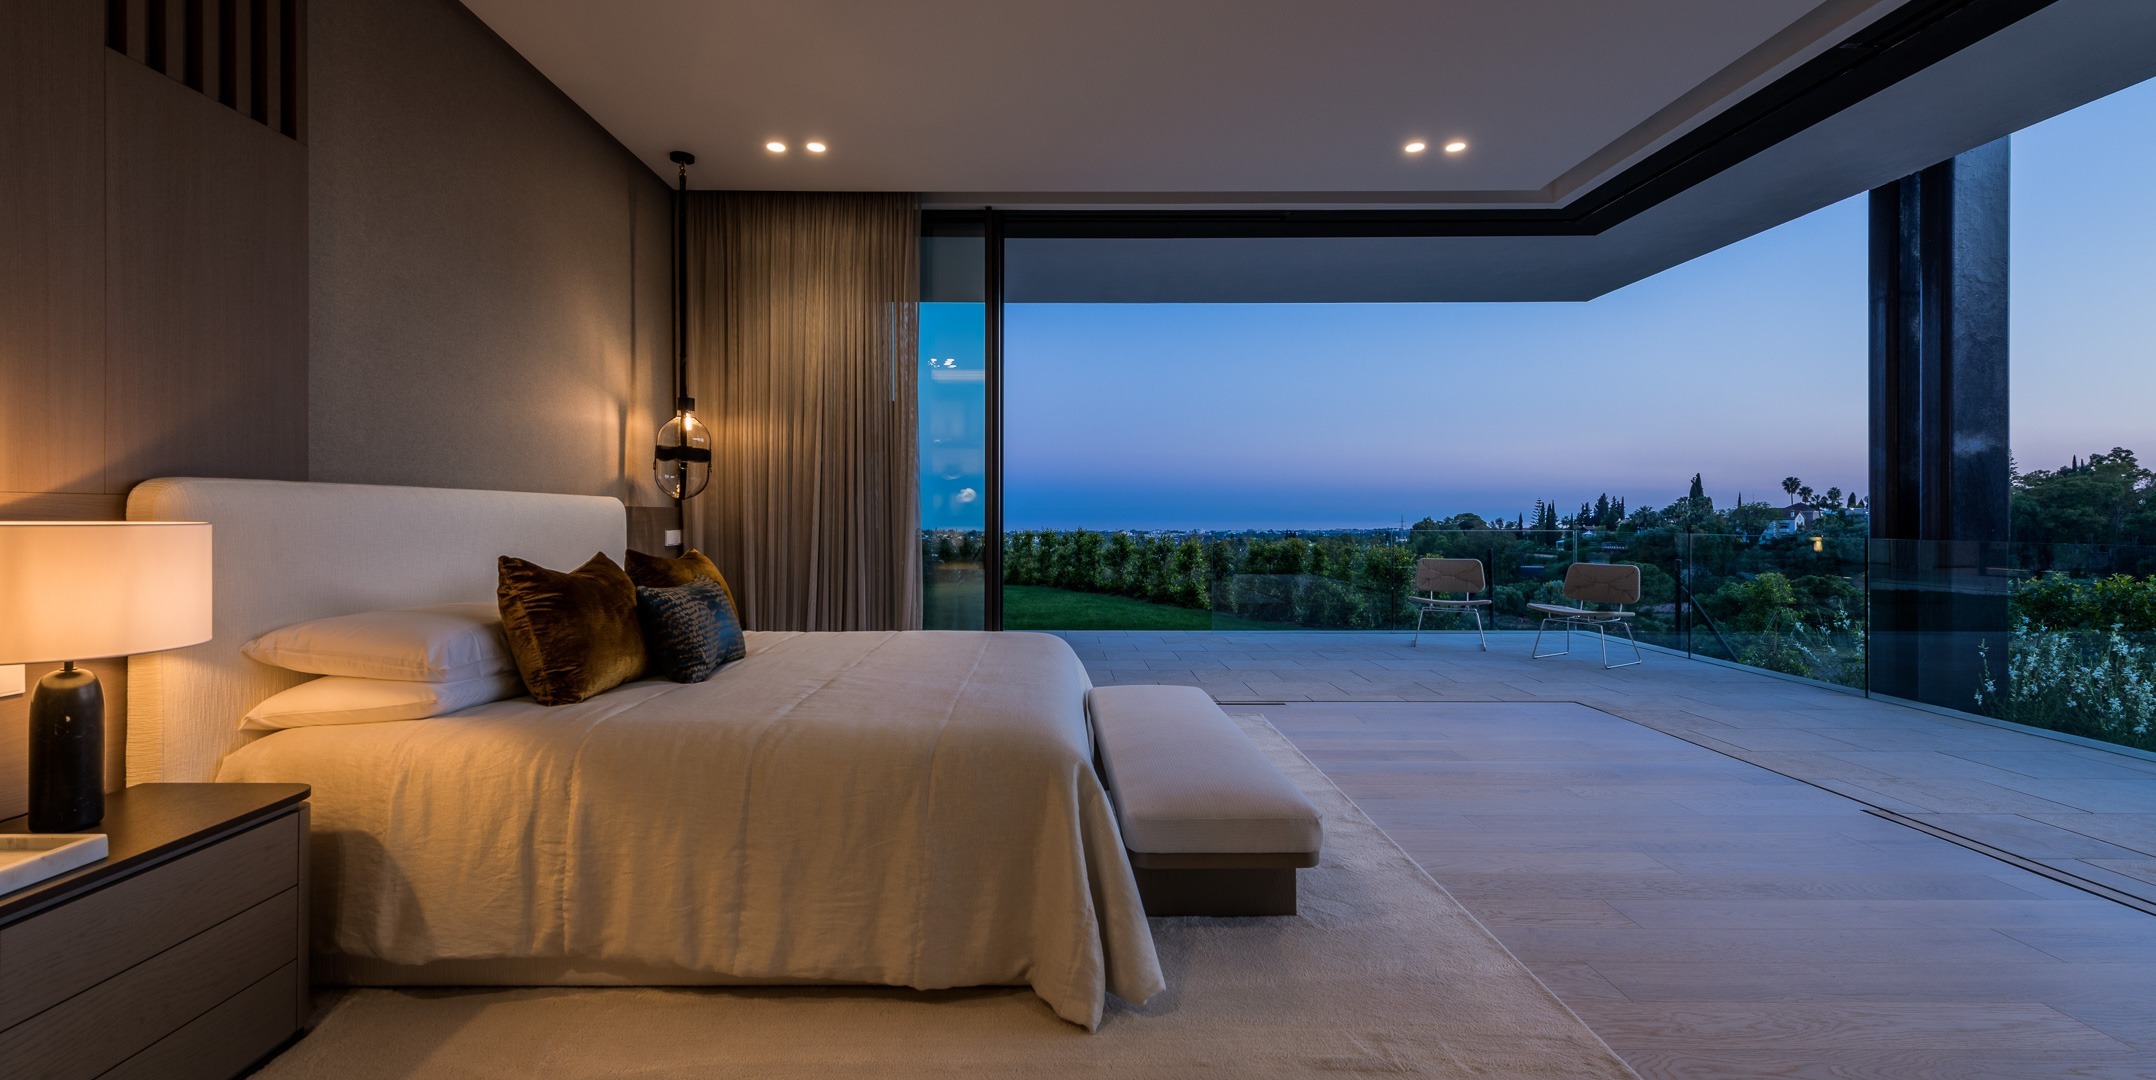 Exclusive top villa room - El Herrojo - Benahavis